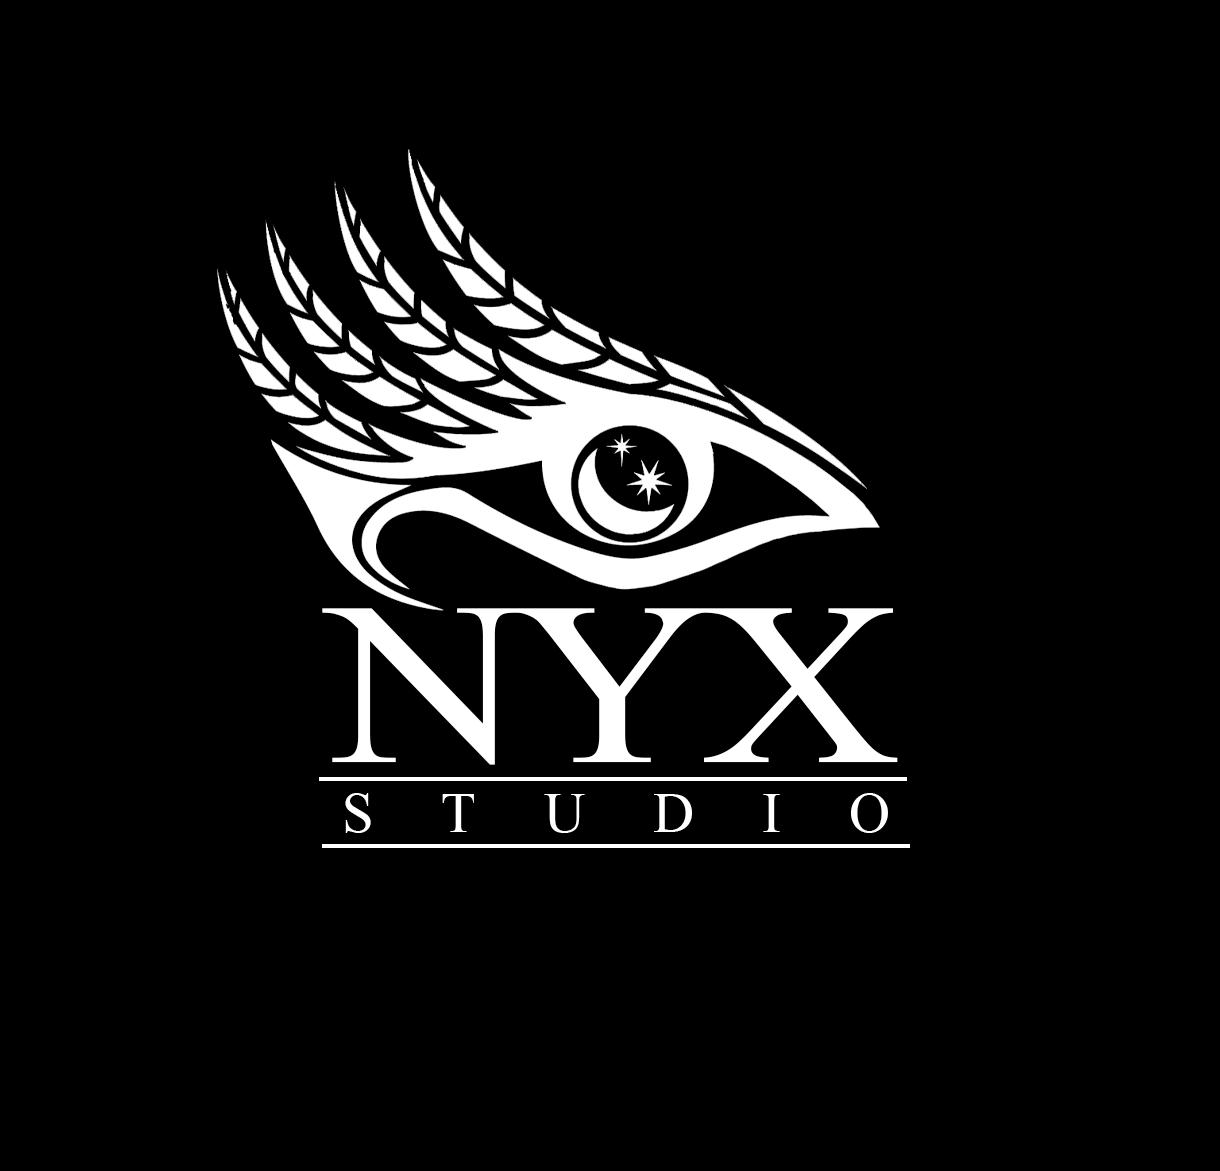 NYX STUDIO SYMBOL.png.jpg